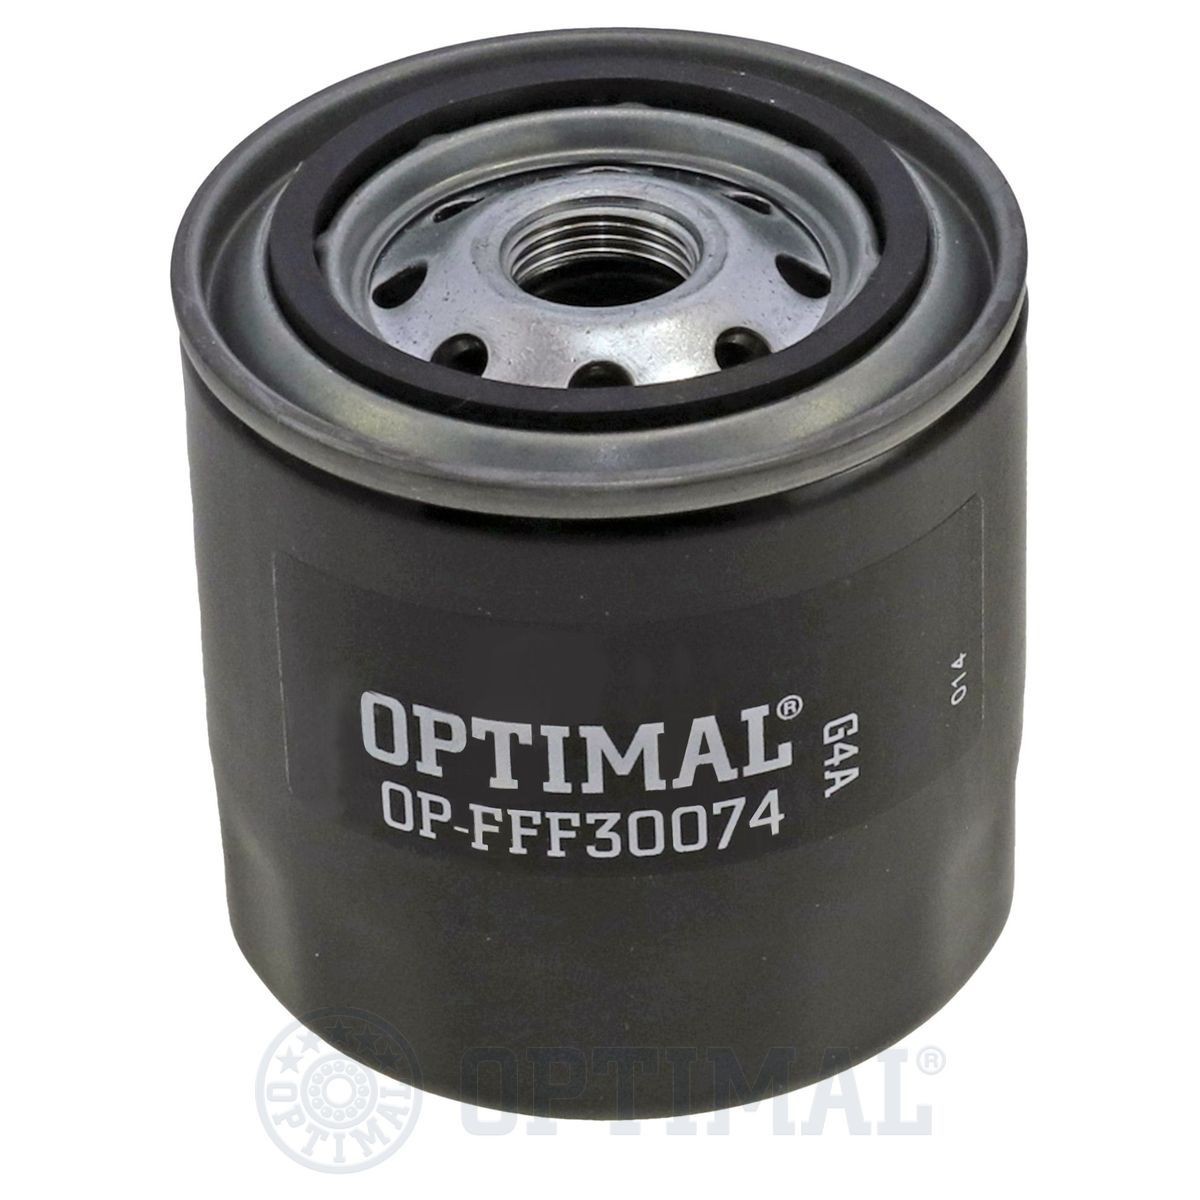 OPTIMAL OP-FFF30074 Fuel filter 16403-J5500